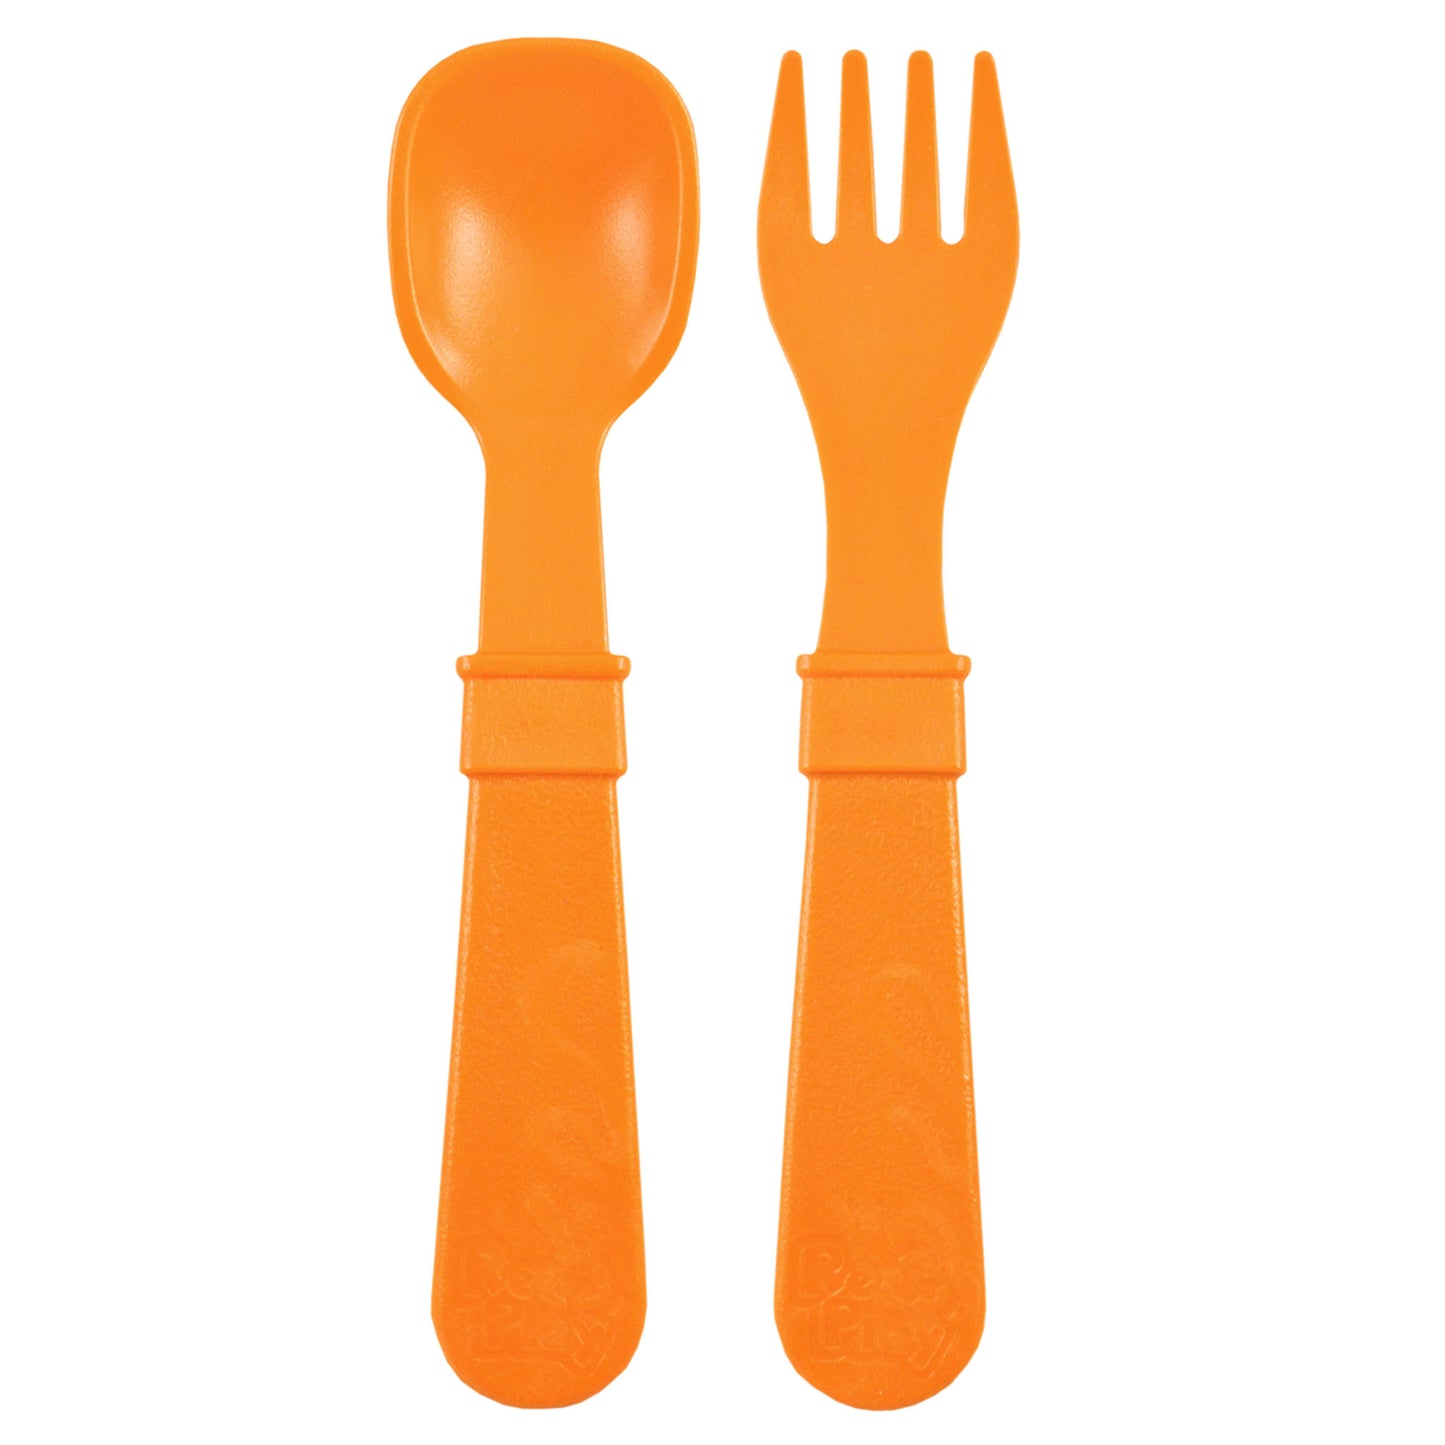 Re-Play Spoon and Folk Set - Orange - BabyBento